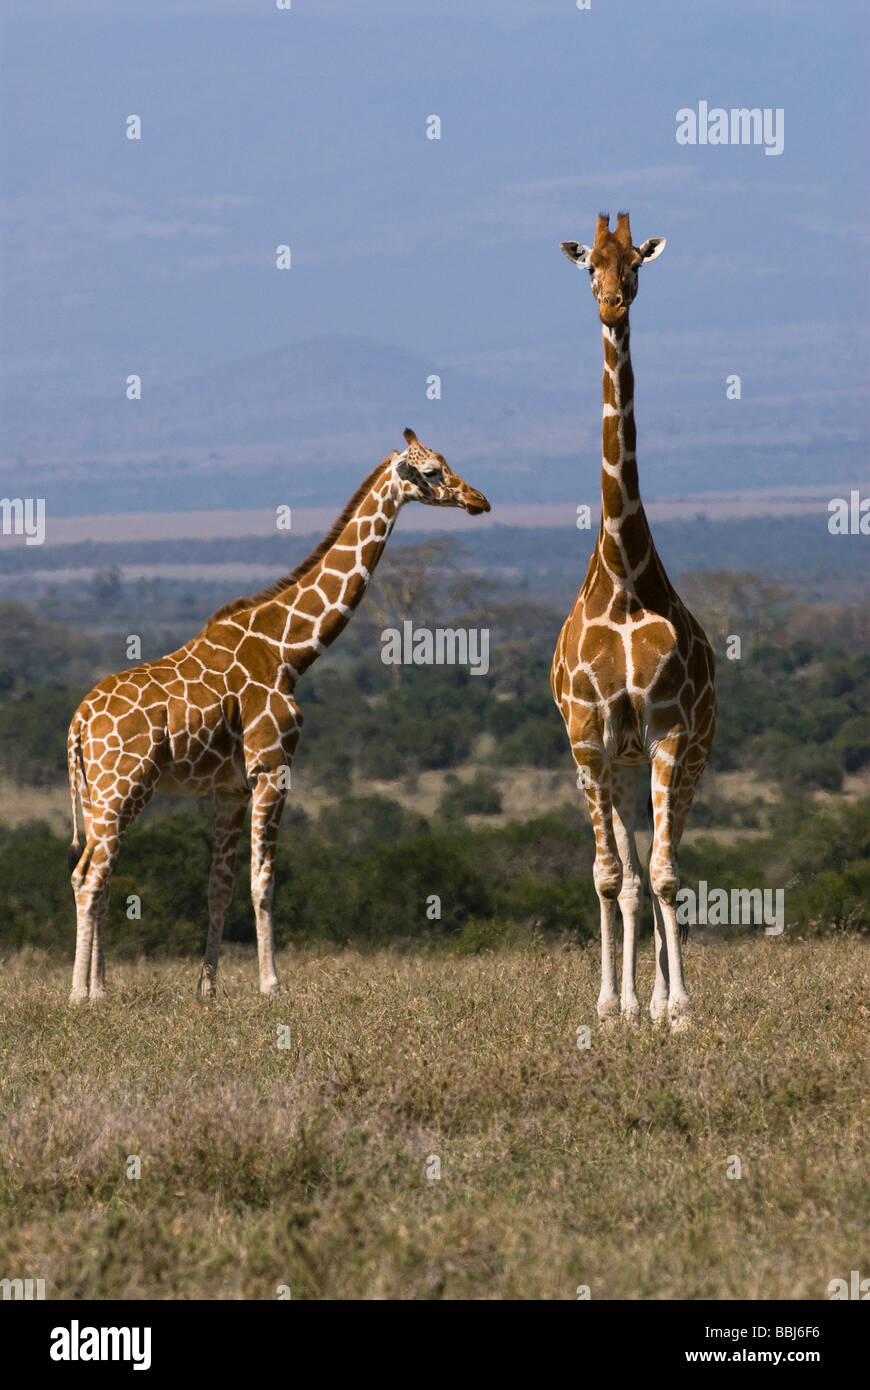 Jirafa reticulada Giraffa camelopardalis reticulata Laikipia Sweetwaters Privat reserva África oriental Kenia Foto de stock